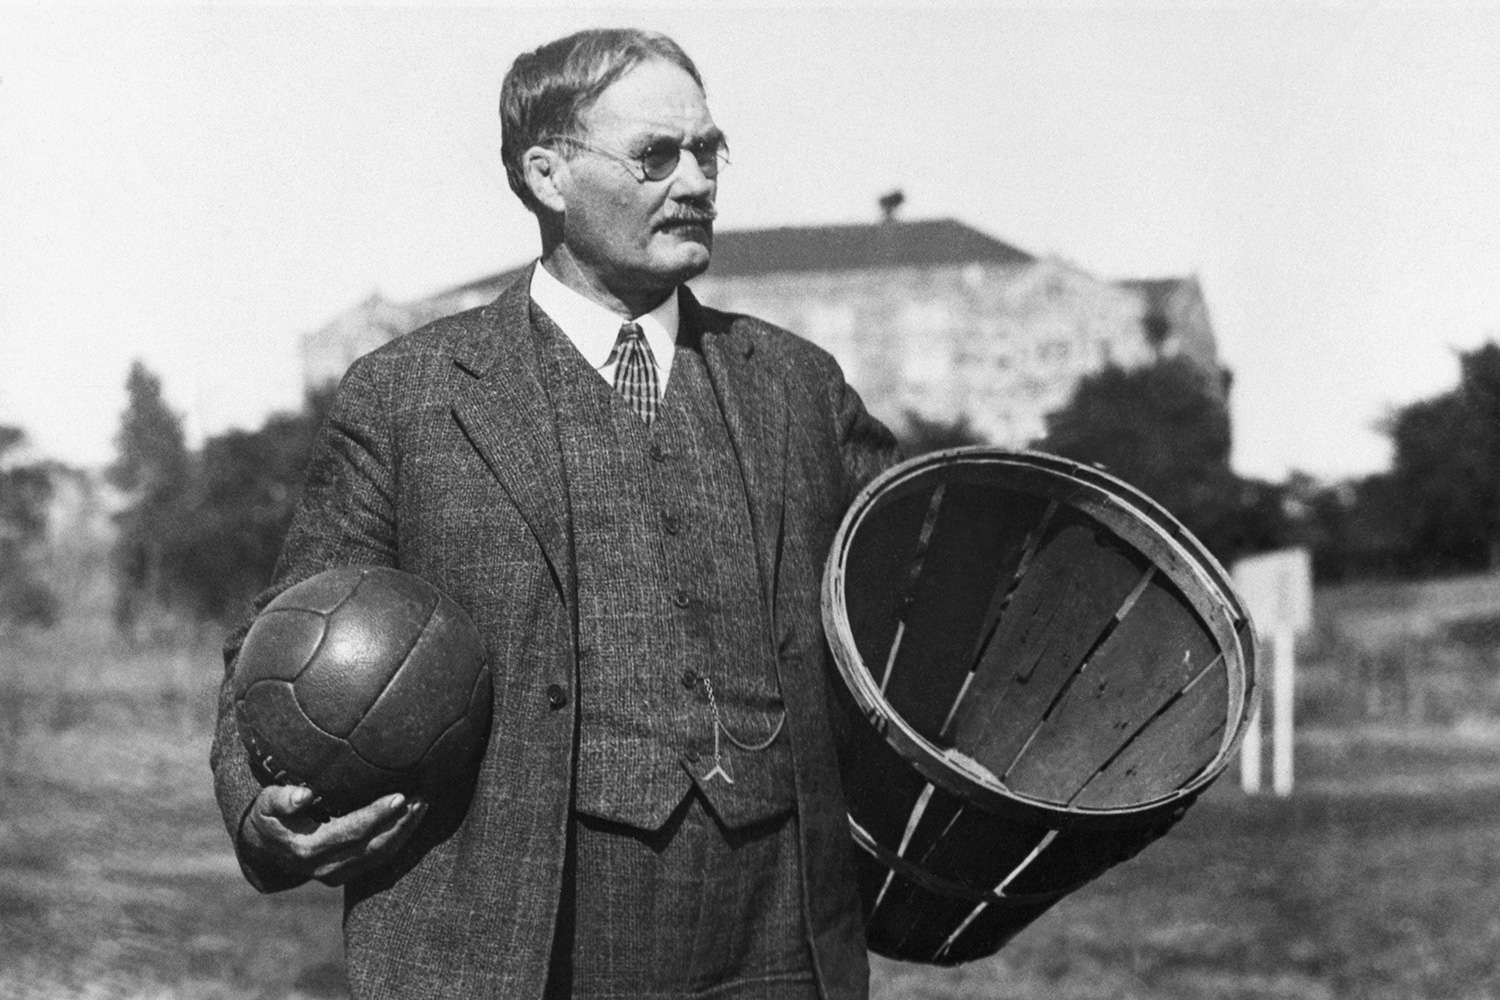 James Naismith, the man who invented basketball